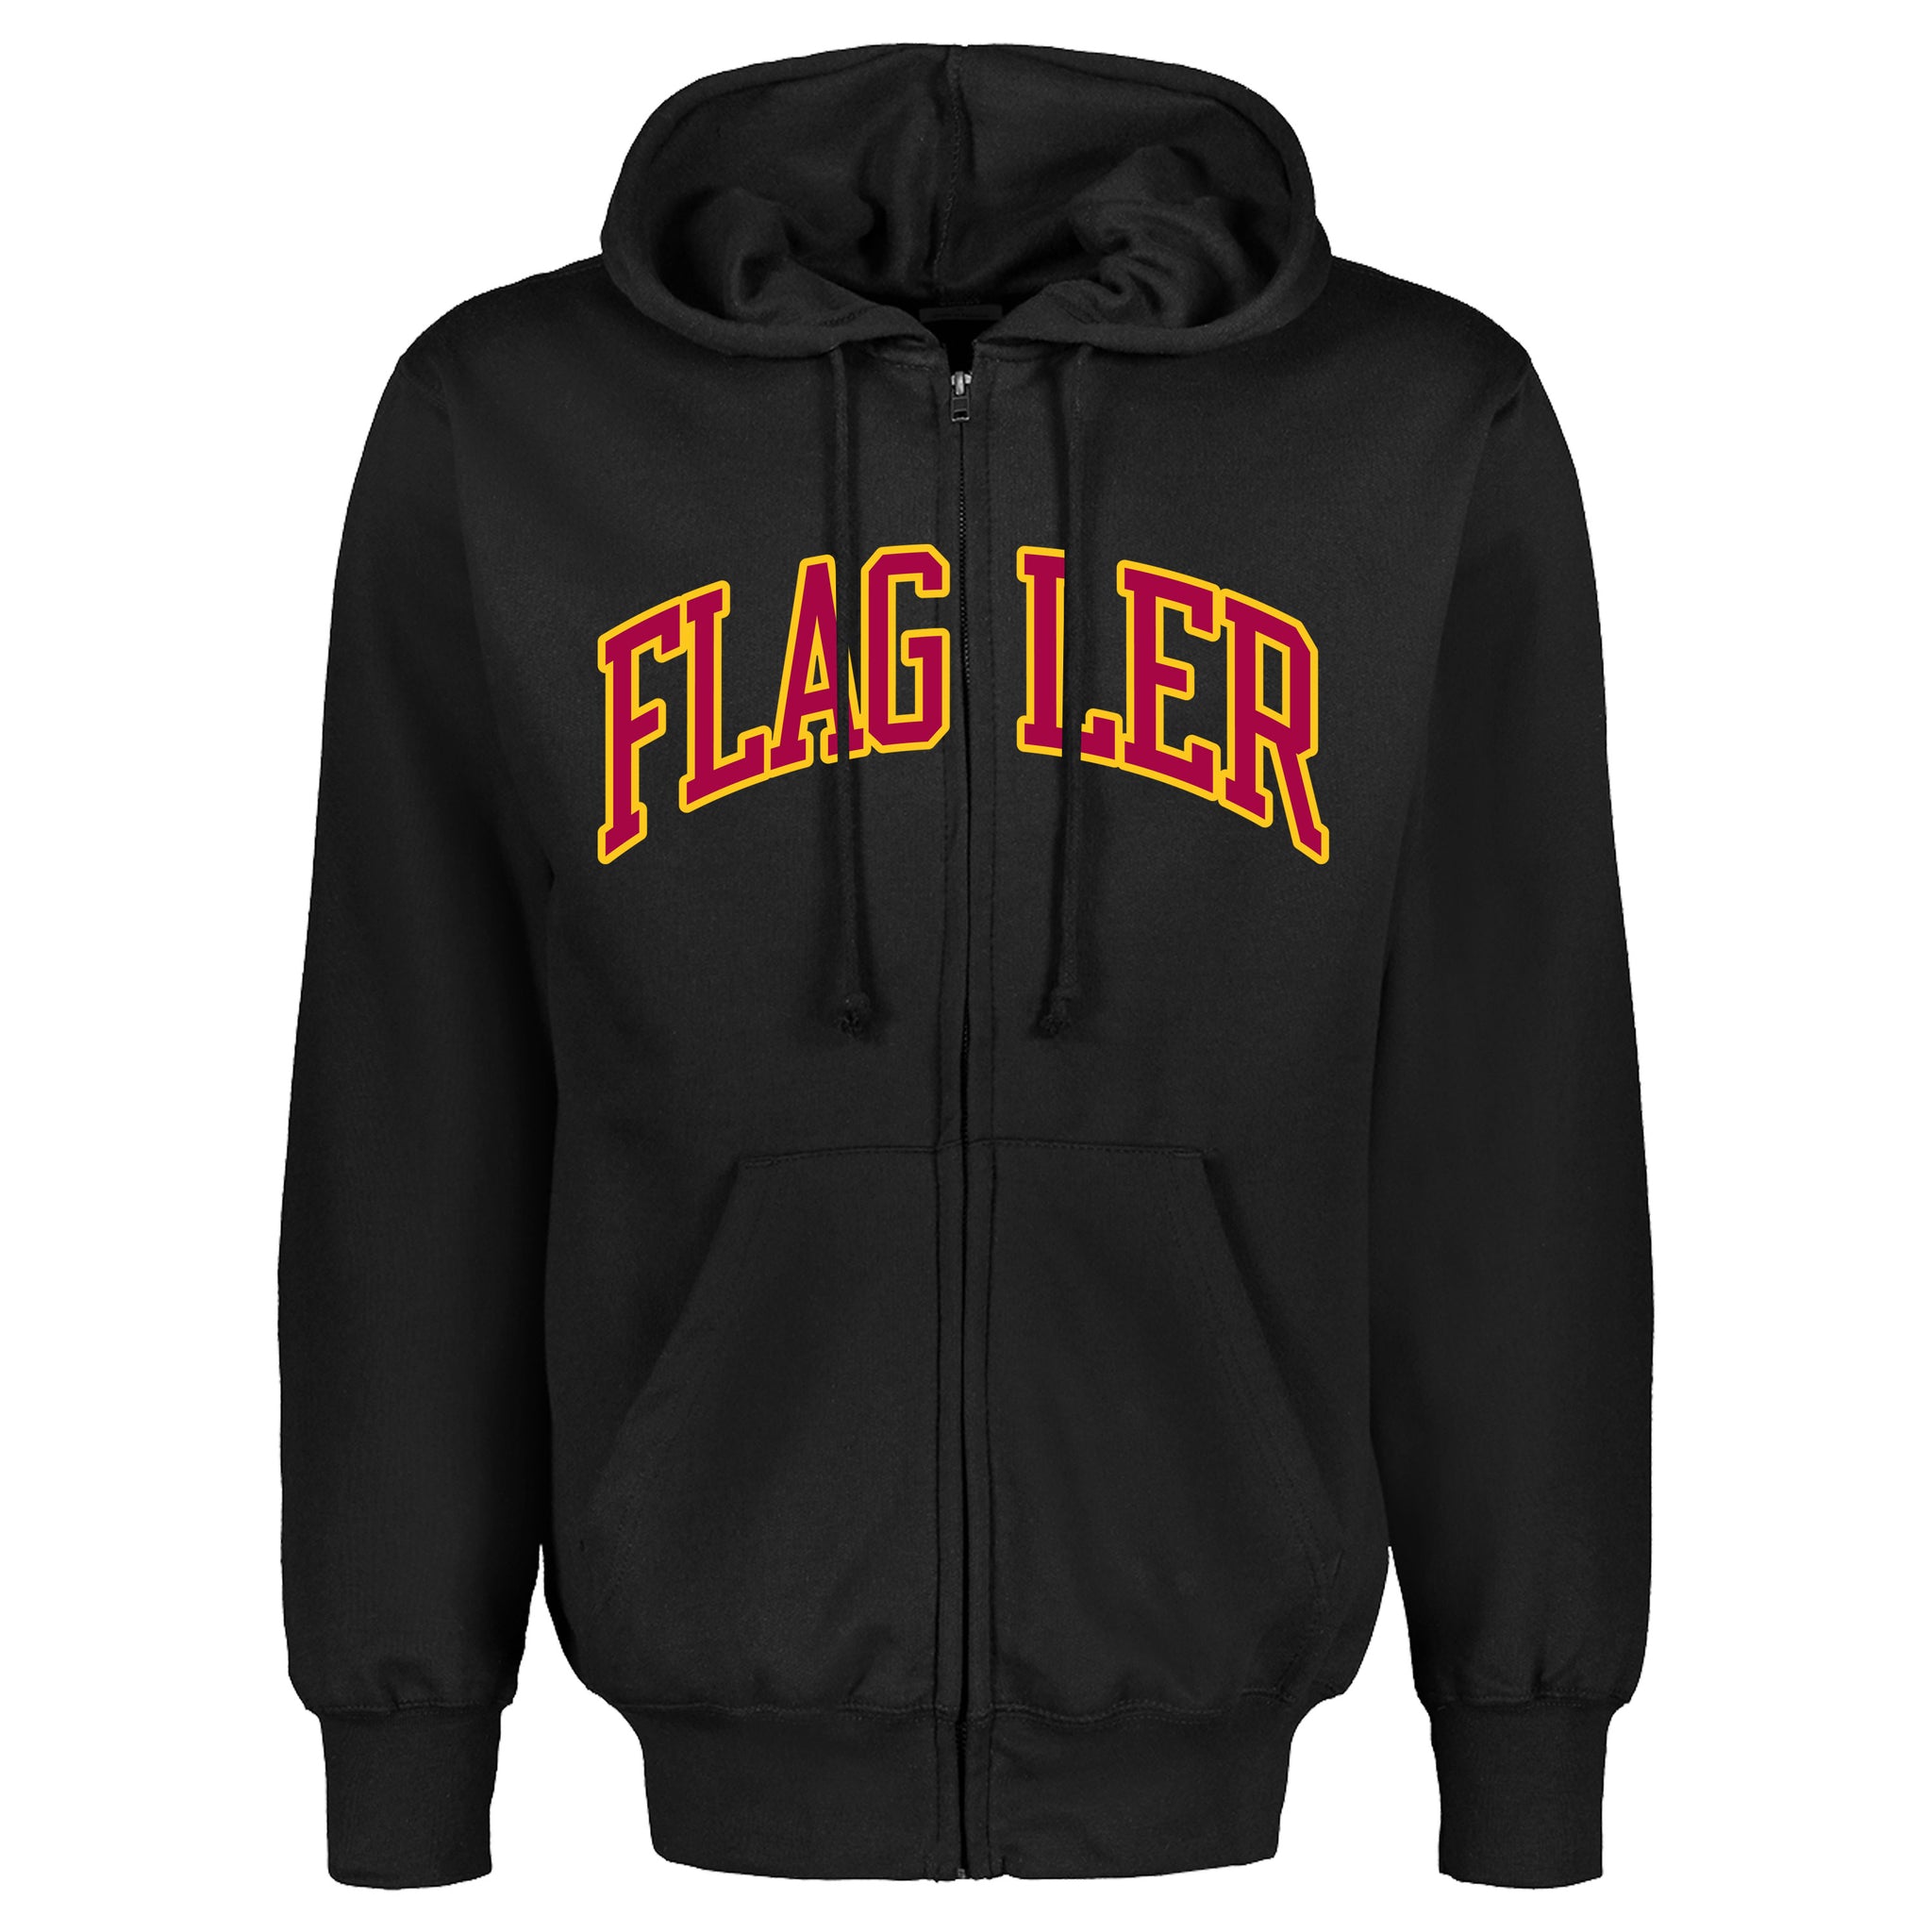 Black full zip hood with crimson and gold imprint saying Flagler